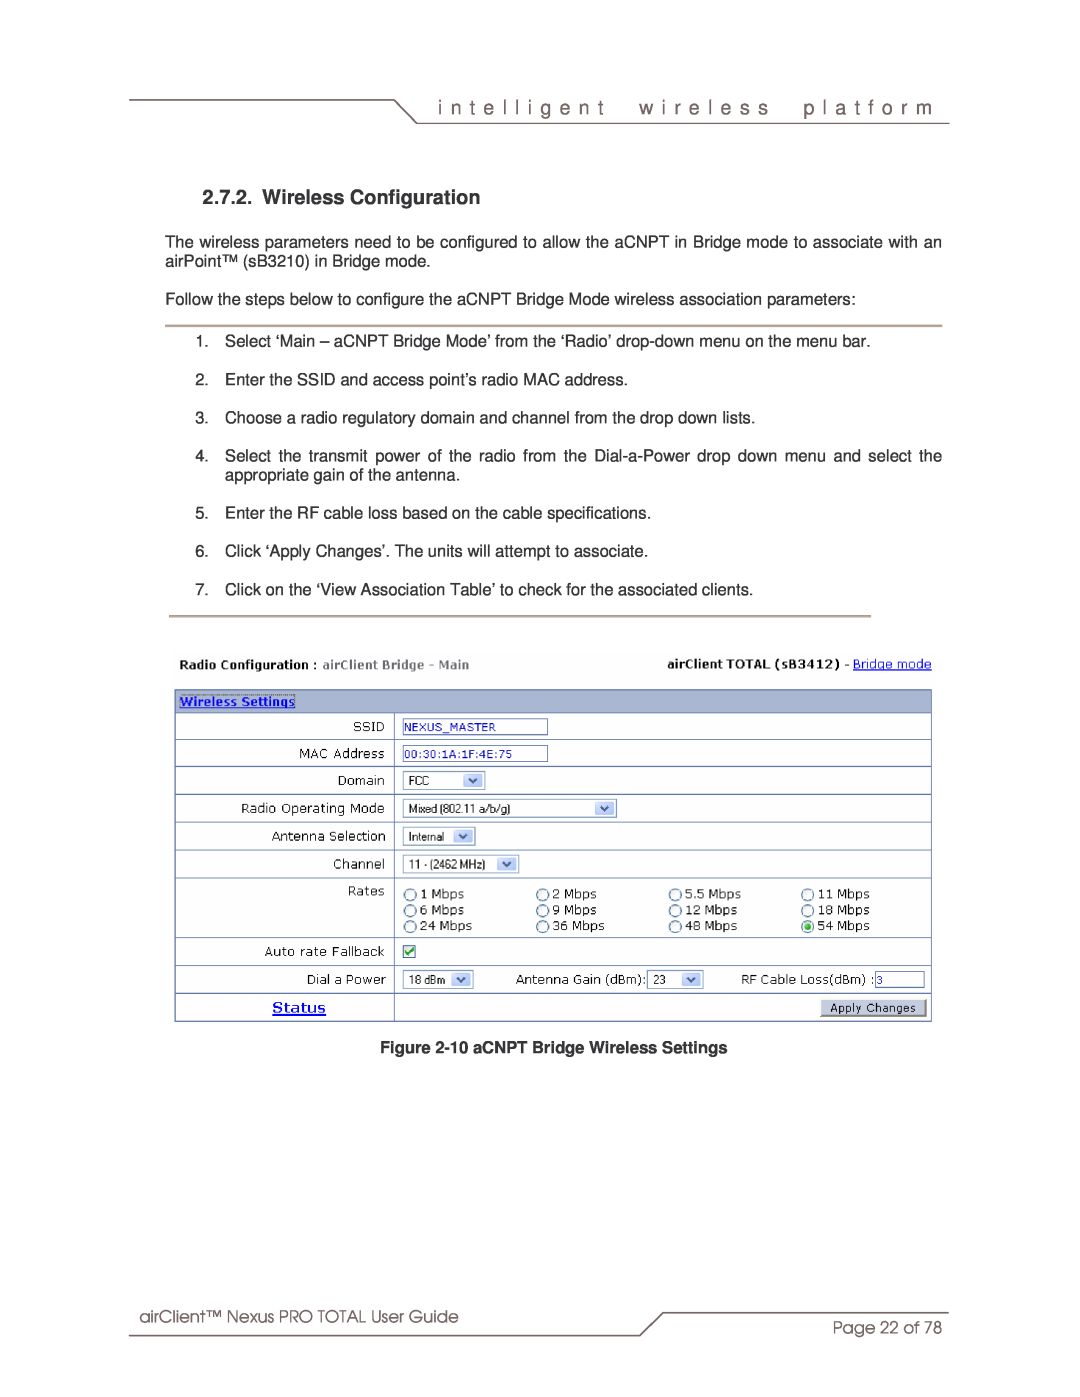 SmartBridges sB3412 manual Wireless Configuration, i n t e l l i g e n t, w i r e l e s s, p l a t f o r m, Page 22 of 